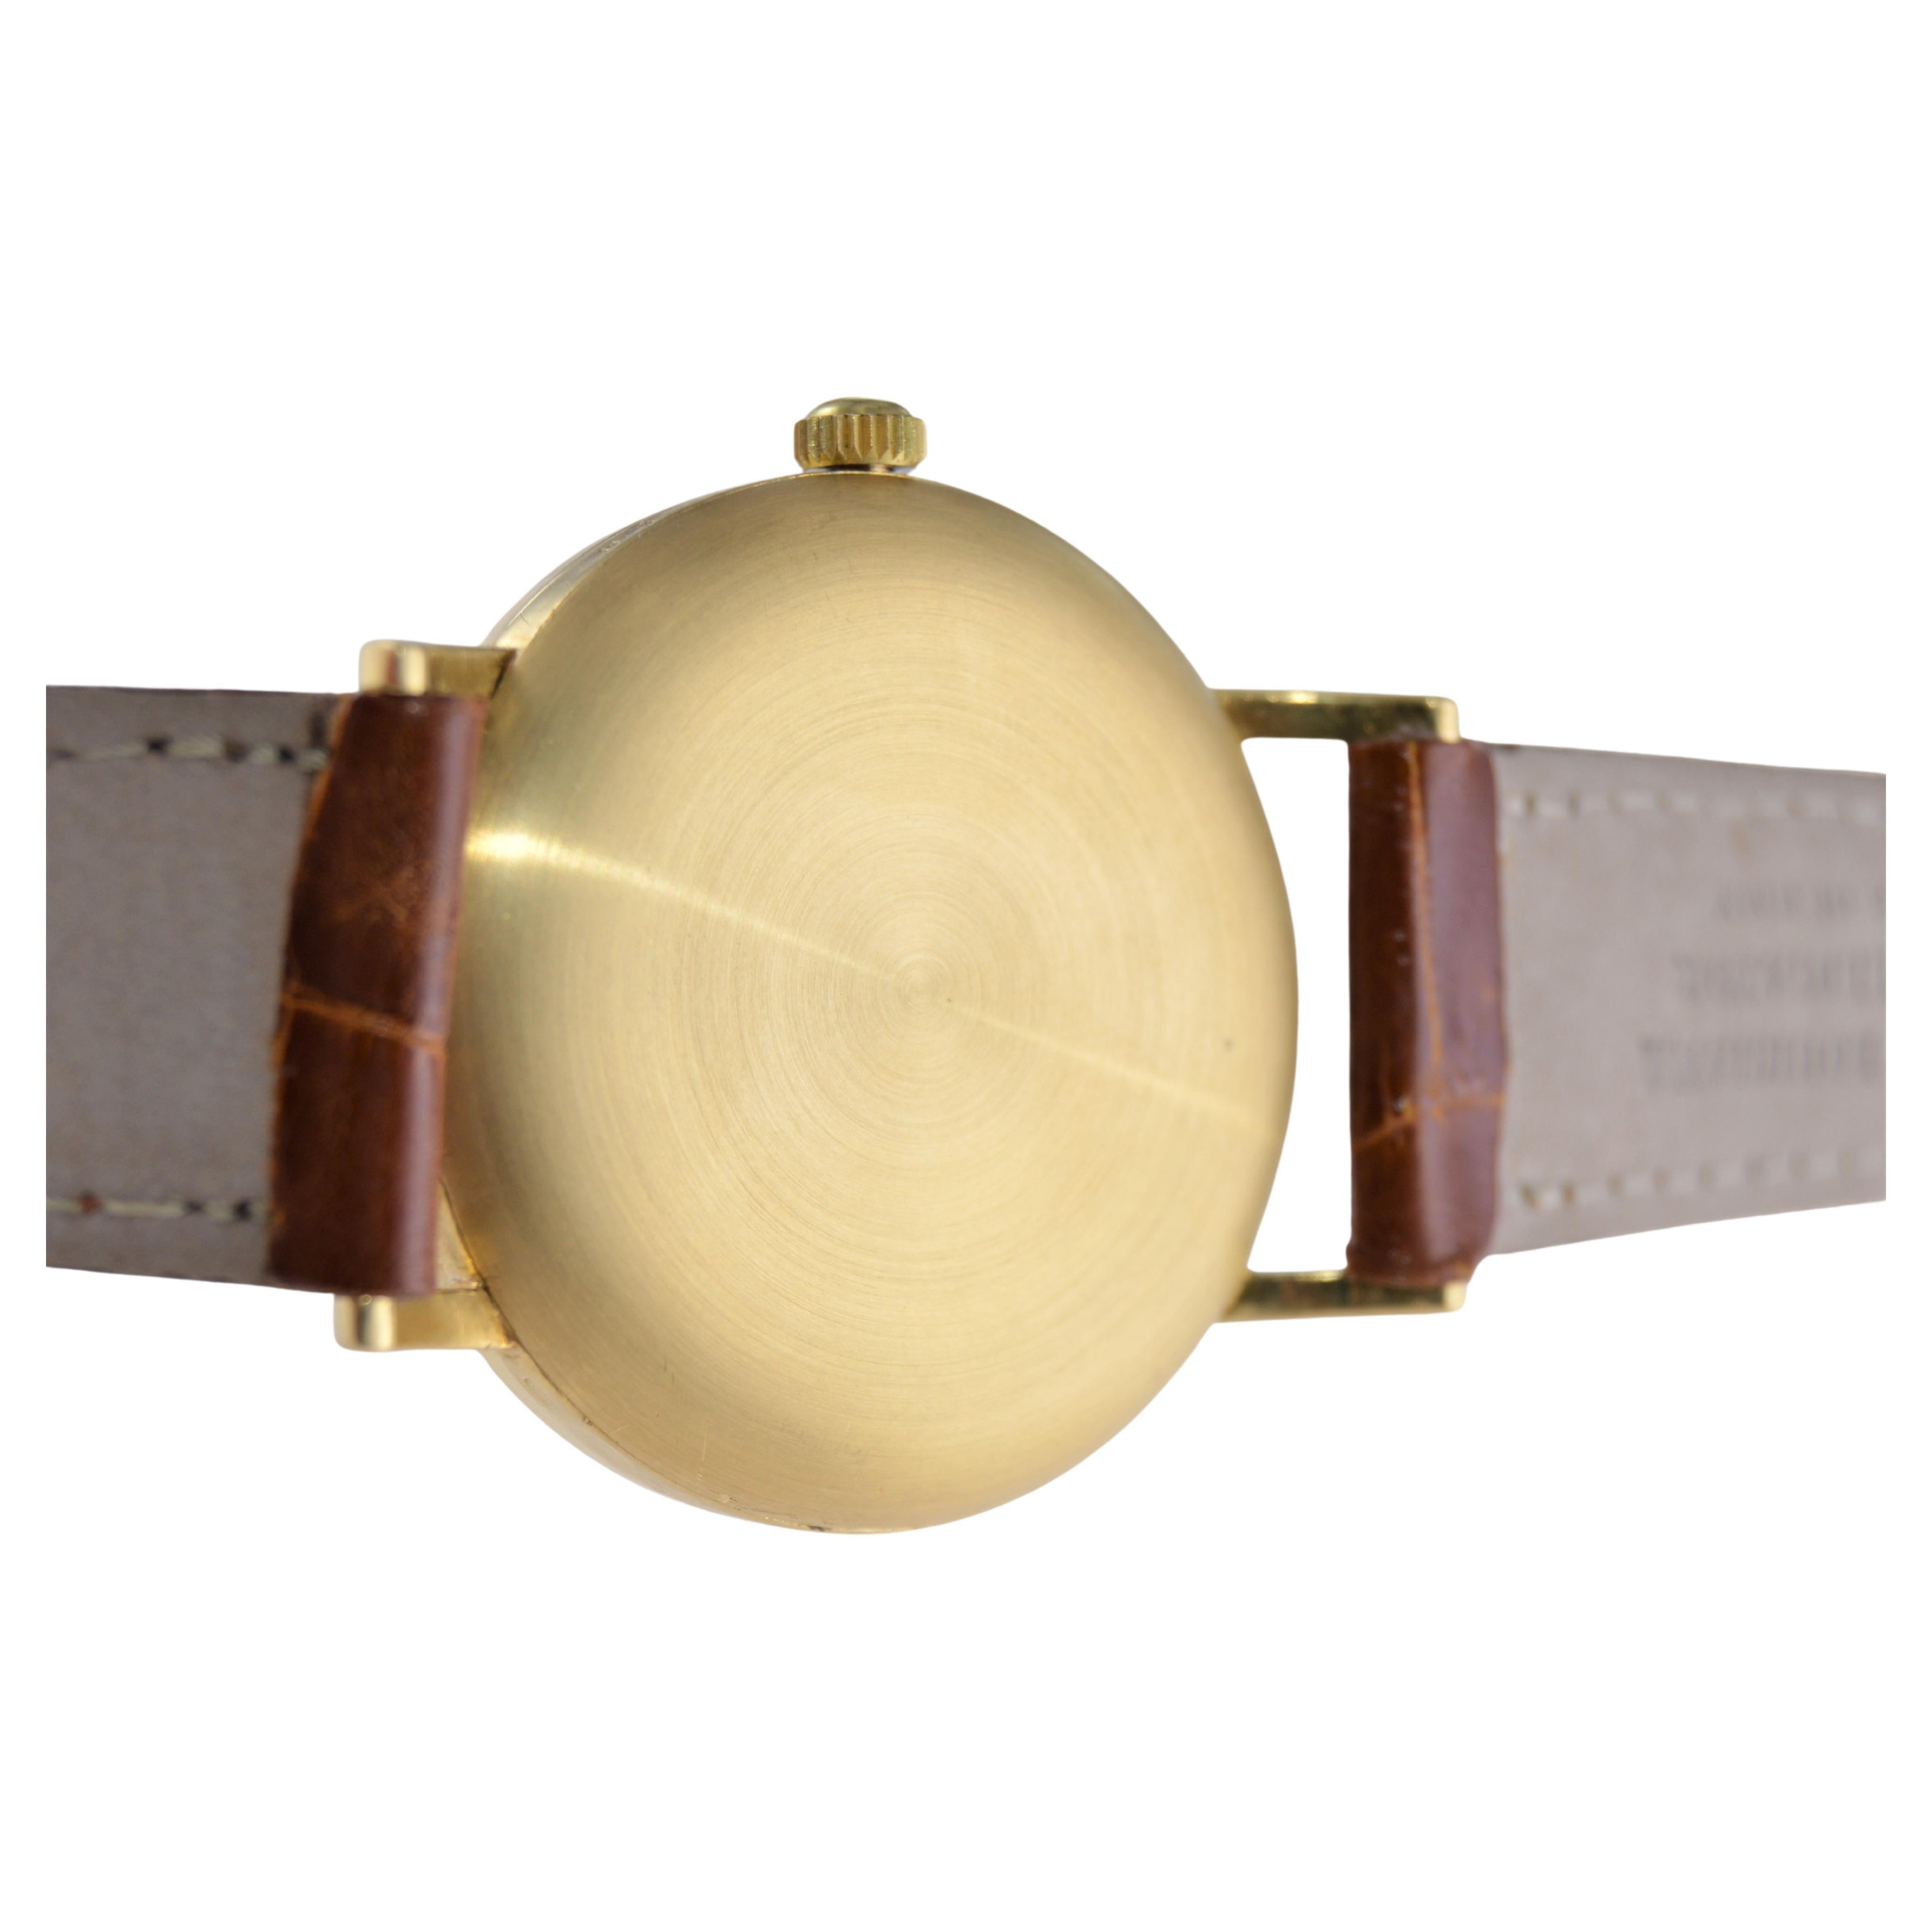 International Watch Company 18 Karat Gold Art Deco Full Size Wristwatch, 1940s For Sale 5